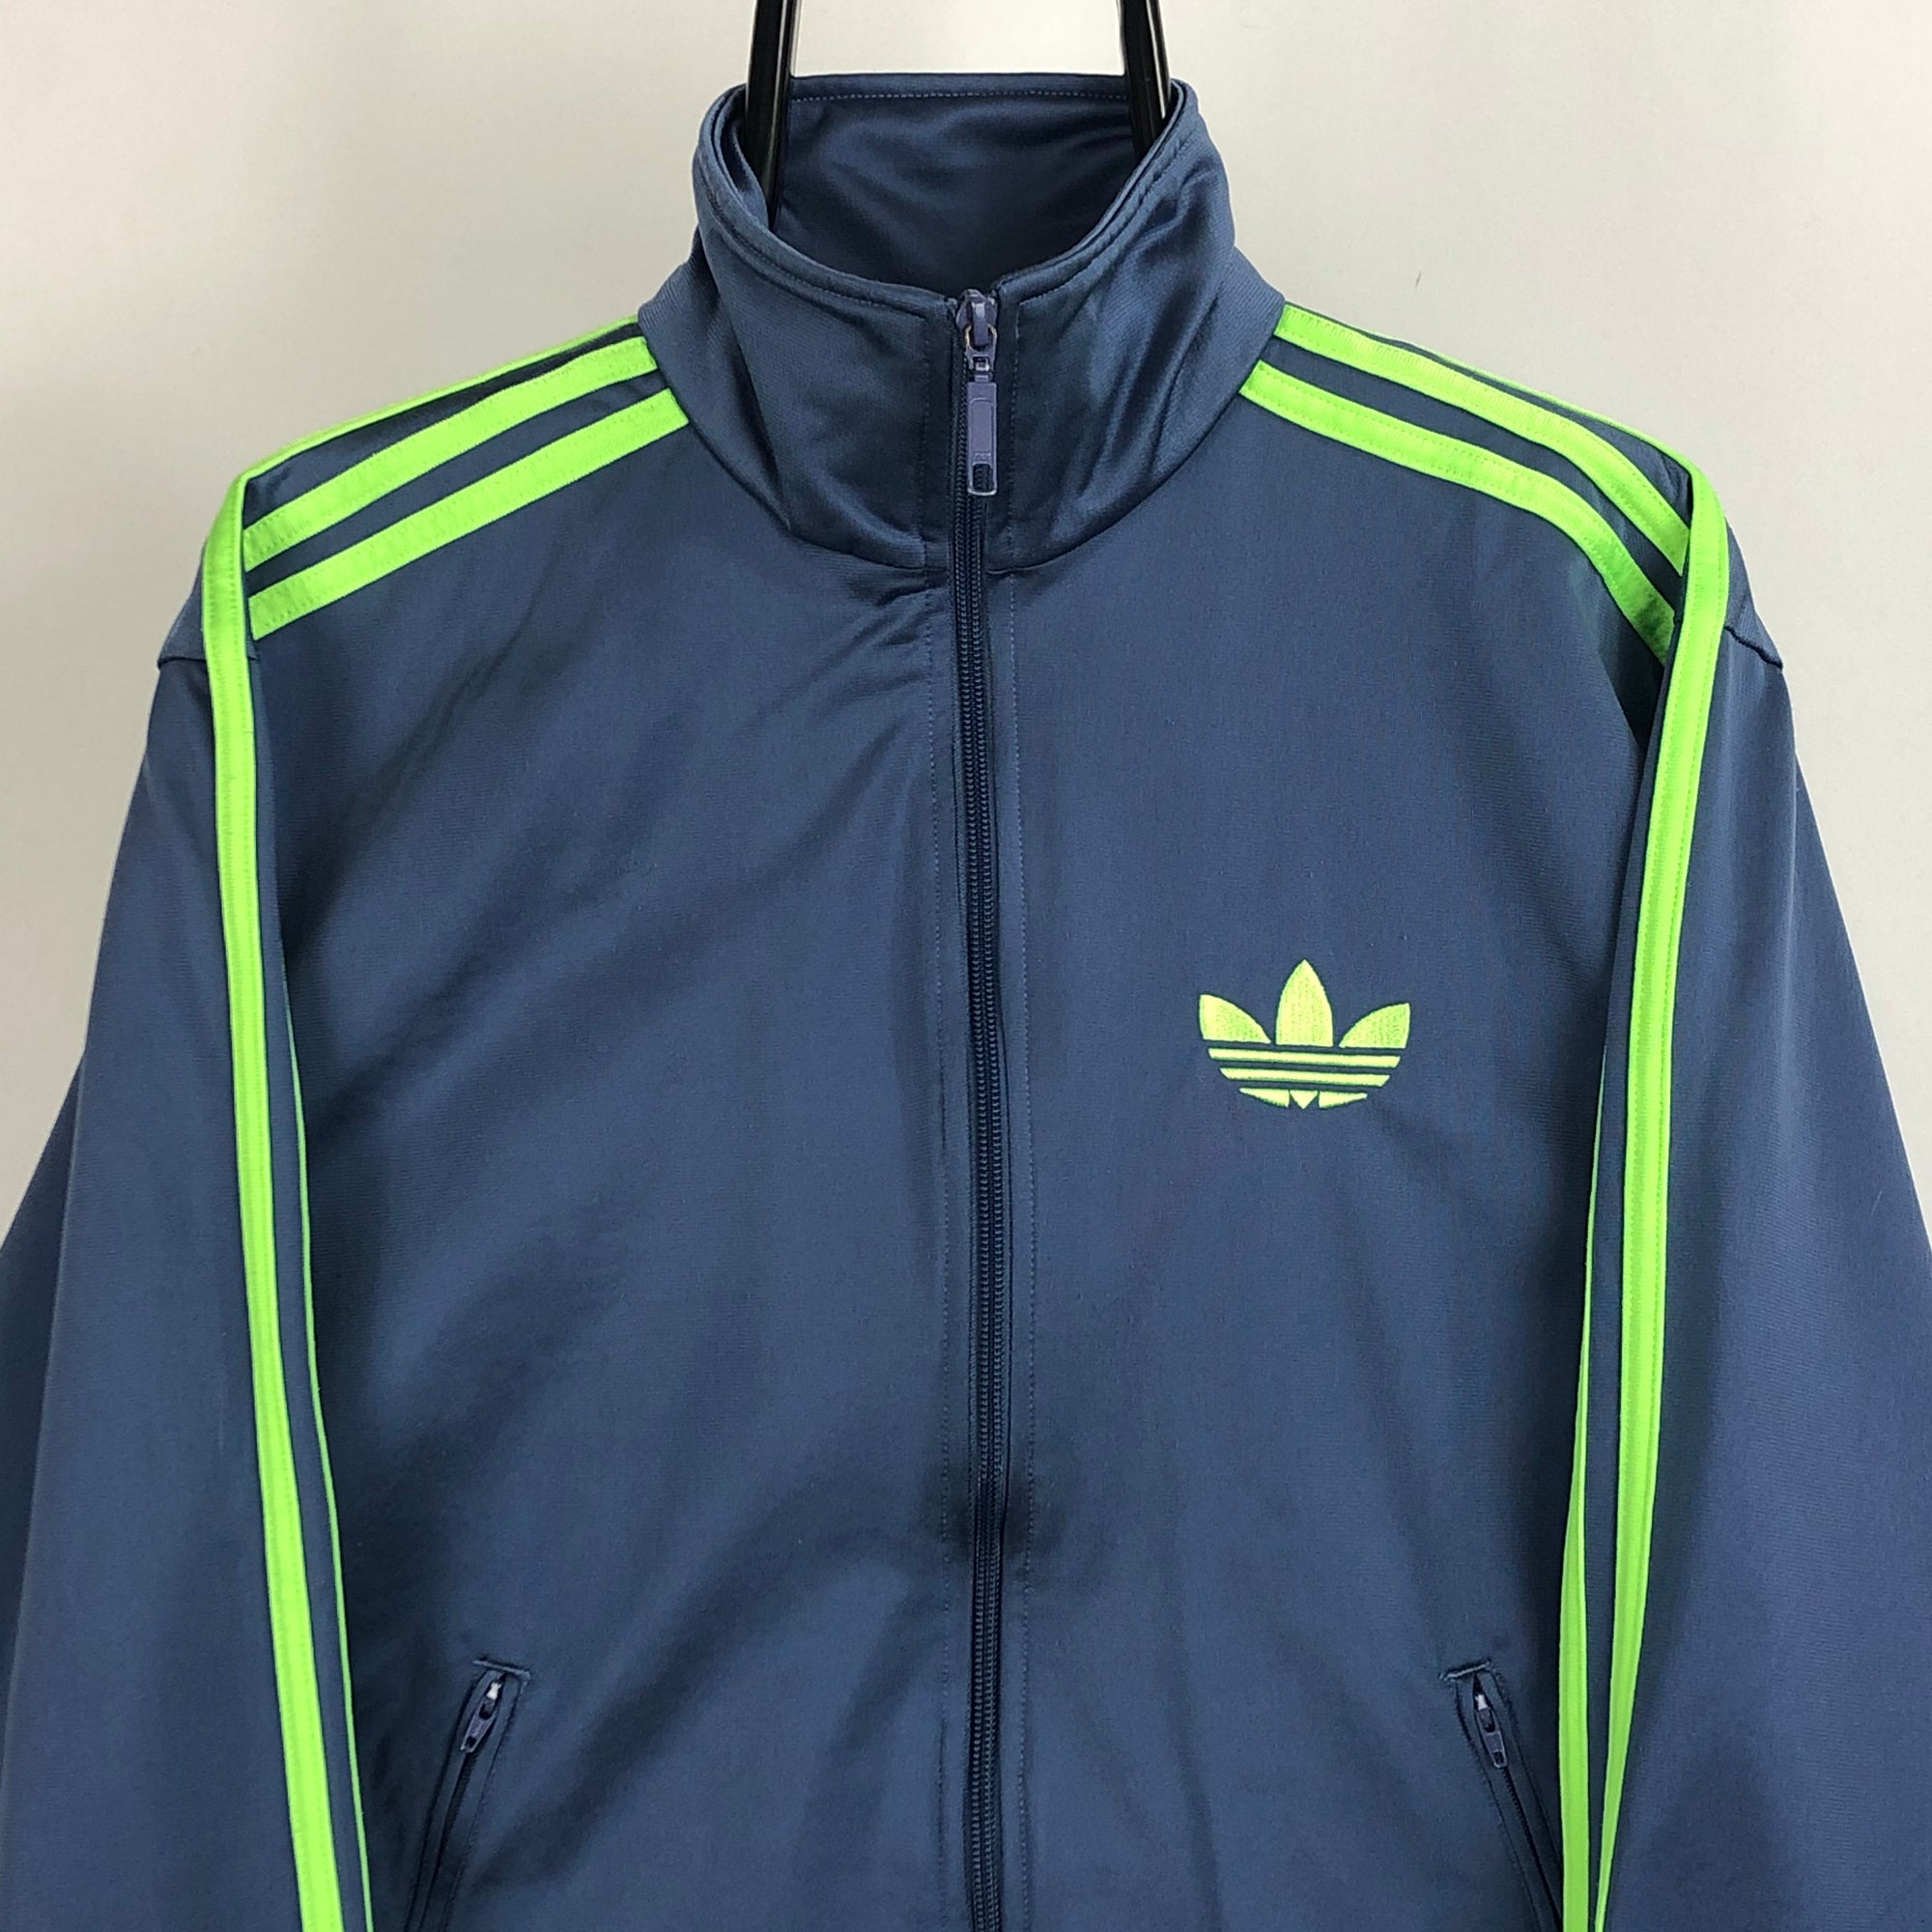 Adidas Originals Track Jacket in Petrol Blue/Green - Men's Small/Women's Medium